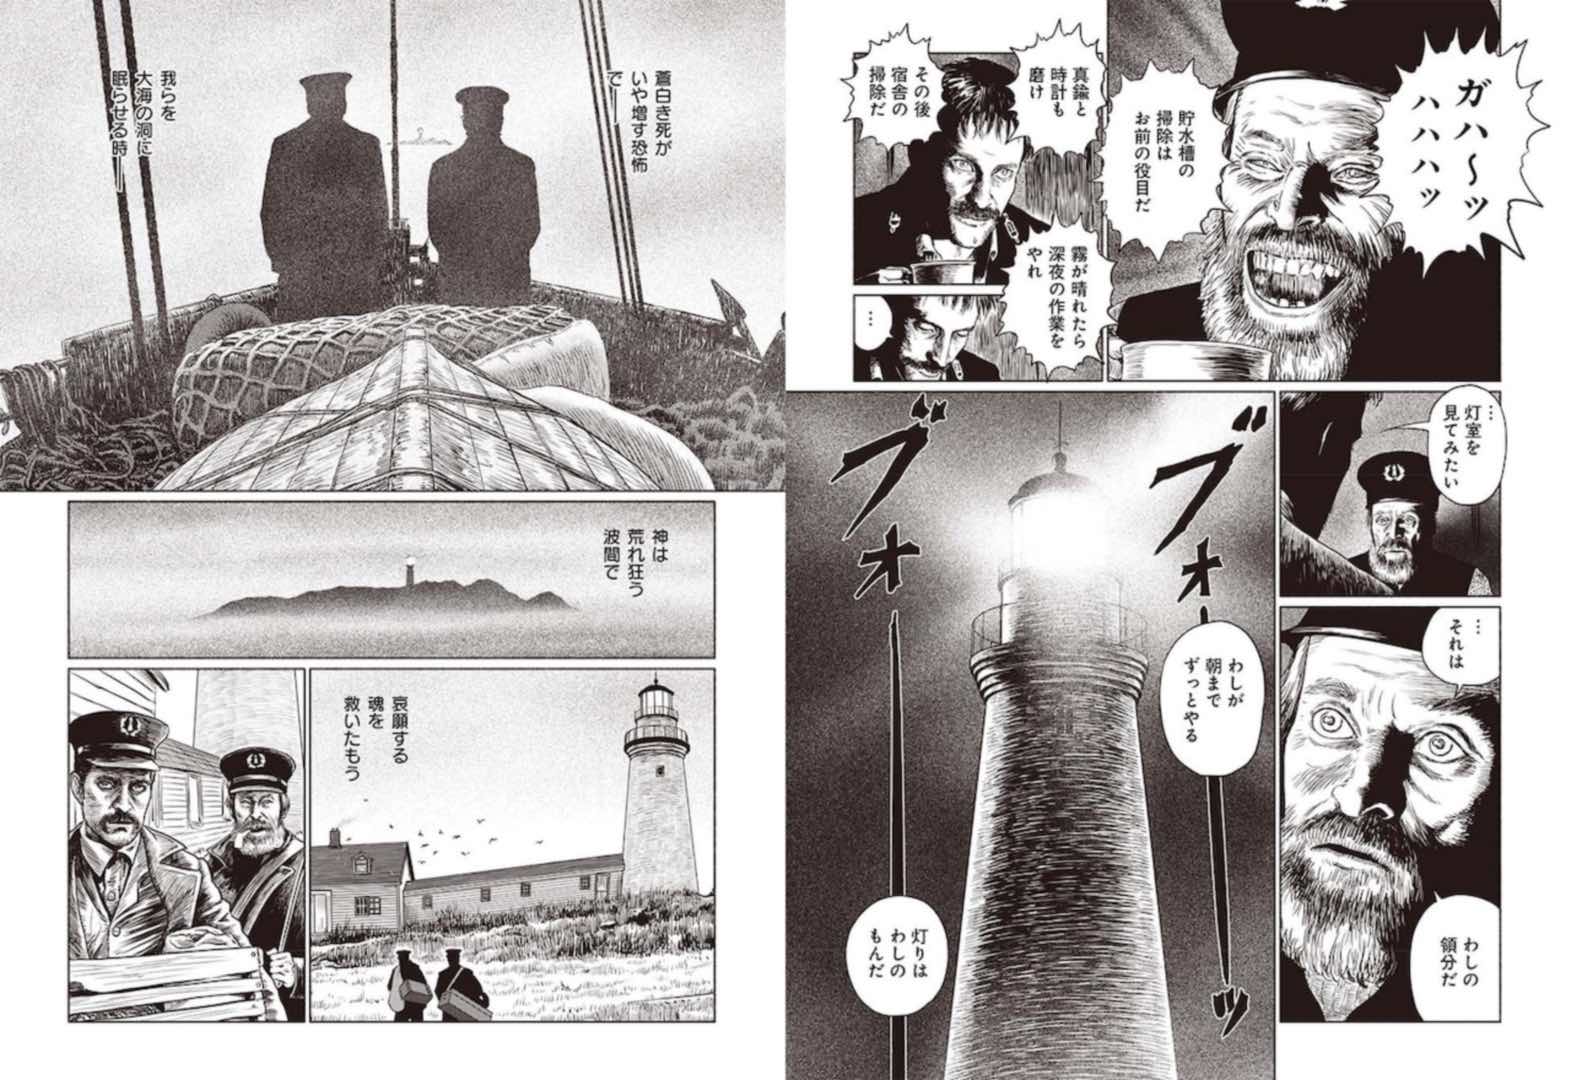 Junji Ito just made A24’s ‘The Lighthouse’ into a manga 2